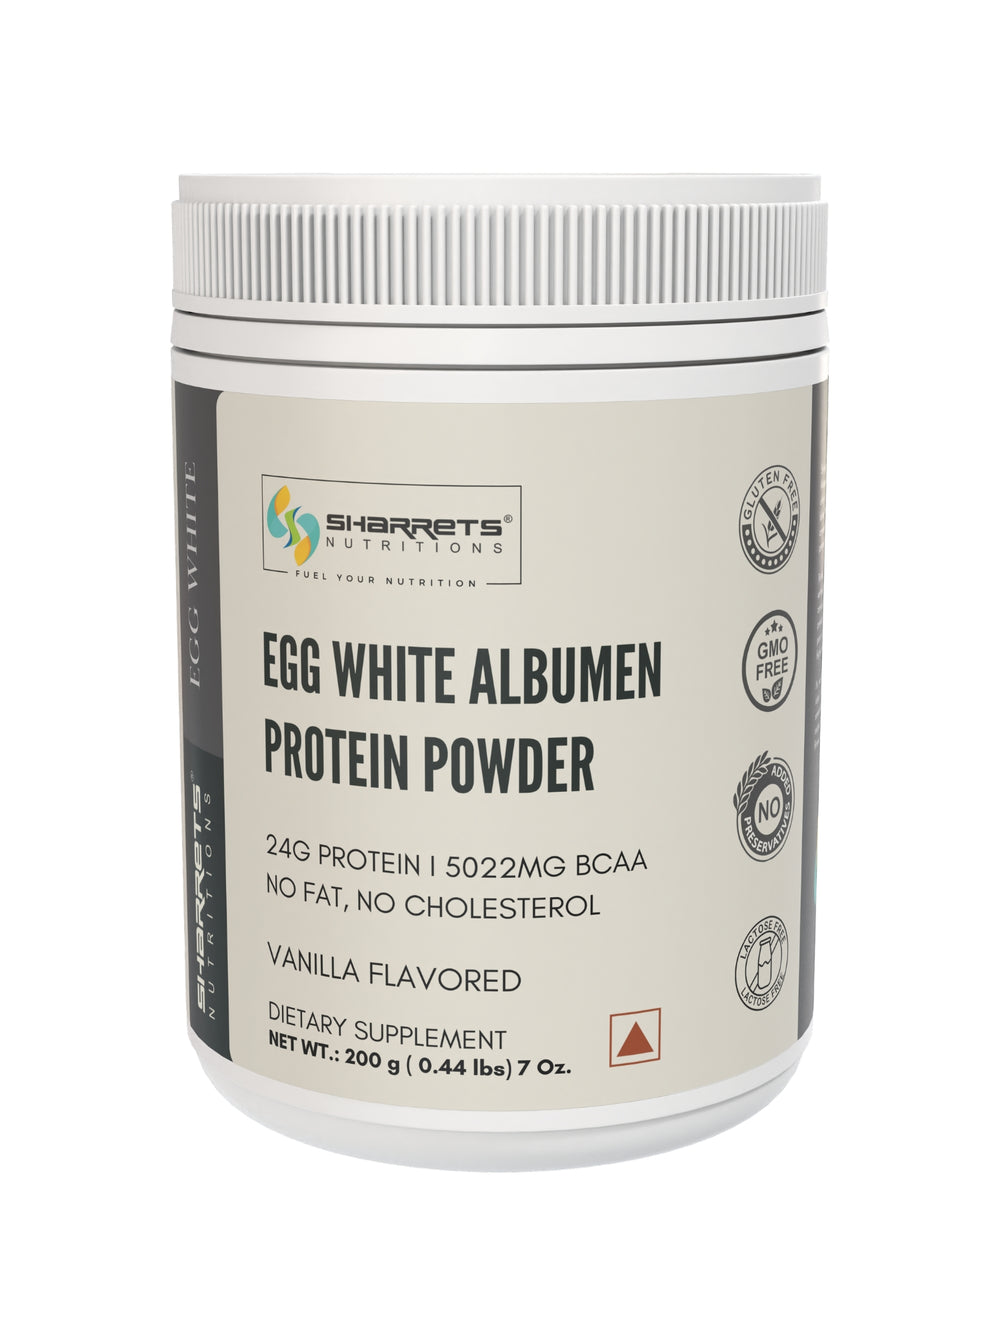 Egg white albumen protein powder vanilla flavored 200g